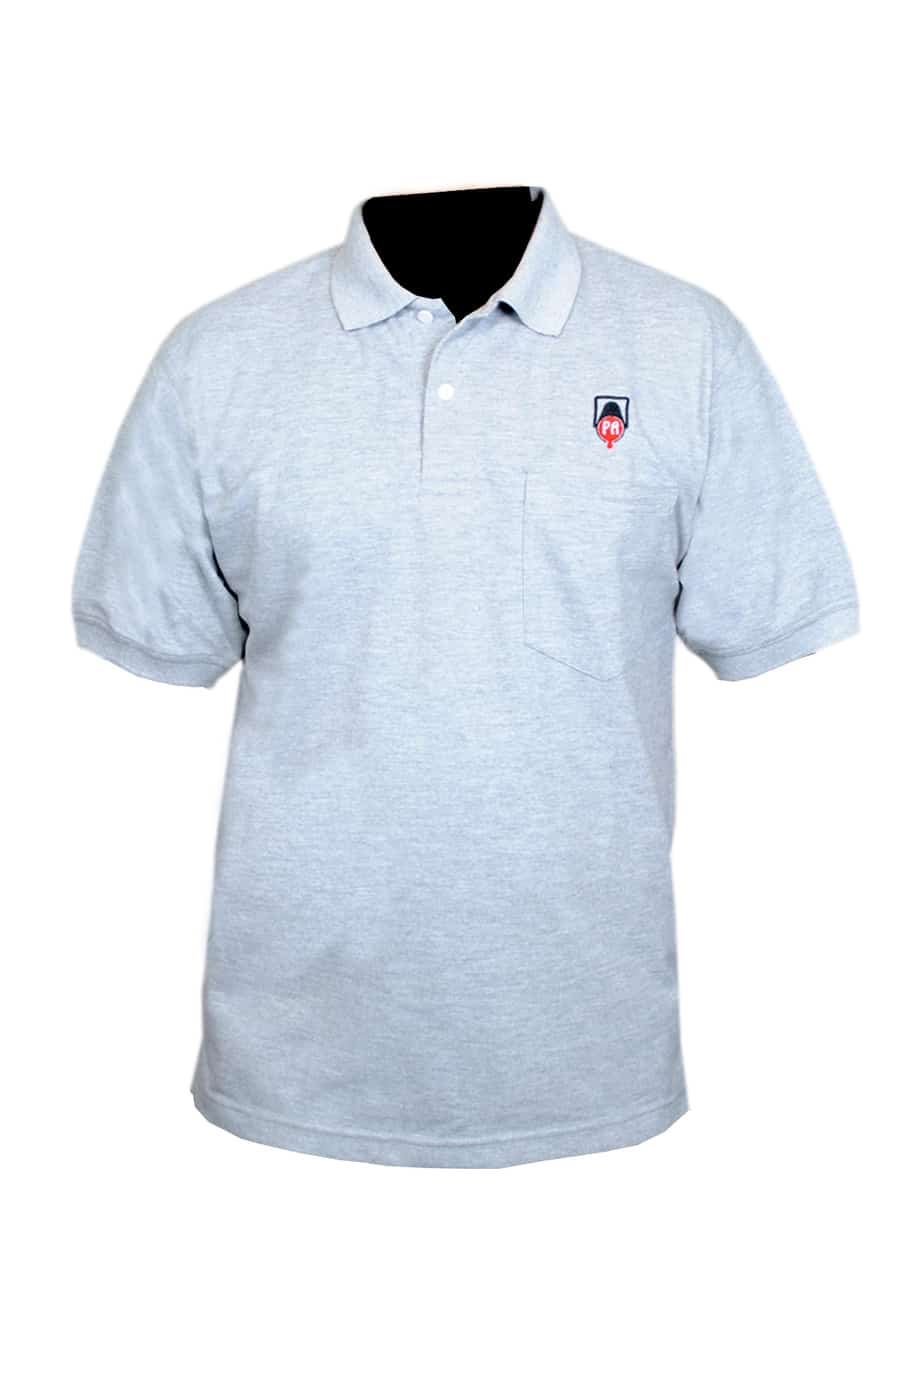 Men’s Polo Neck Plain Grey T-Shirt - pashionclothing